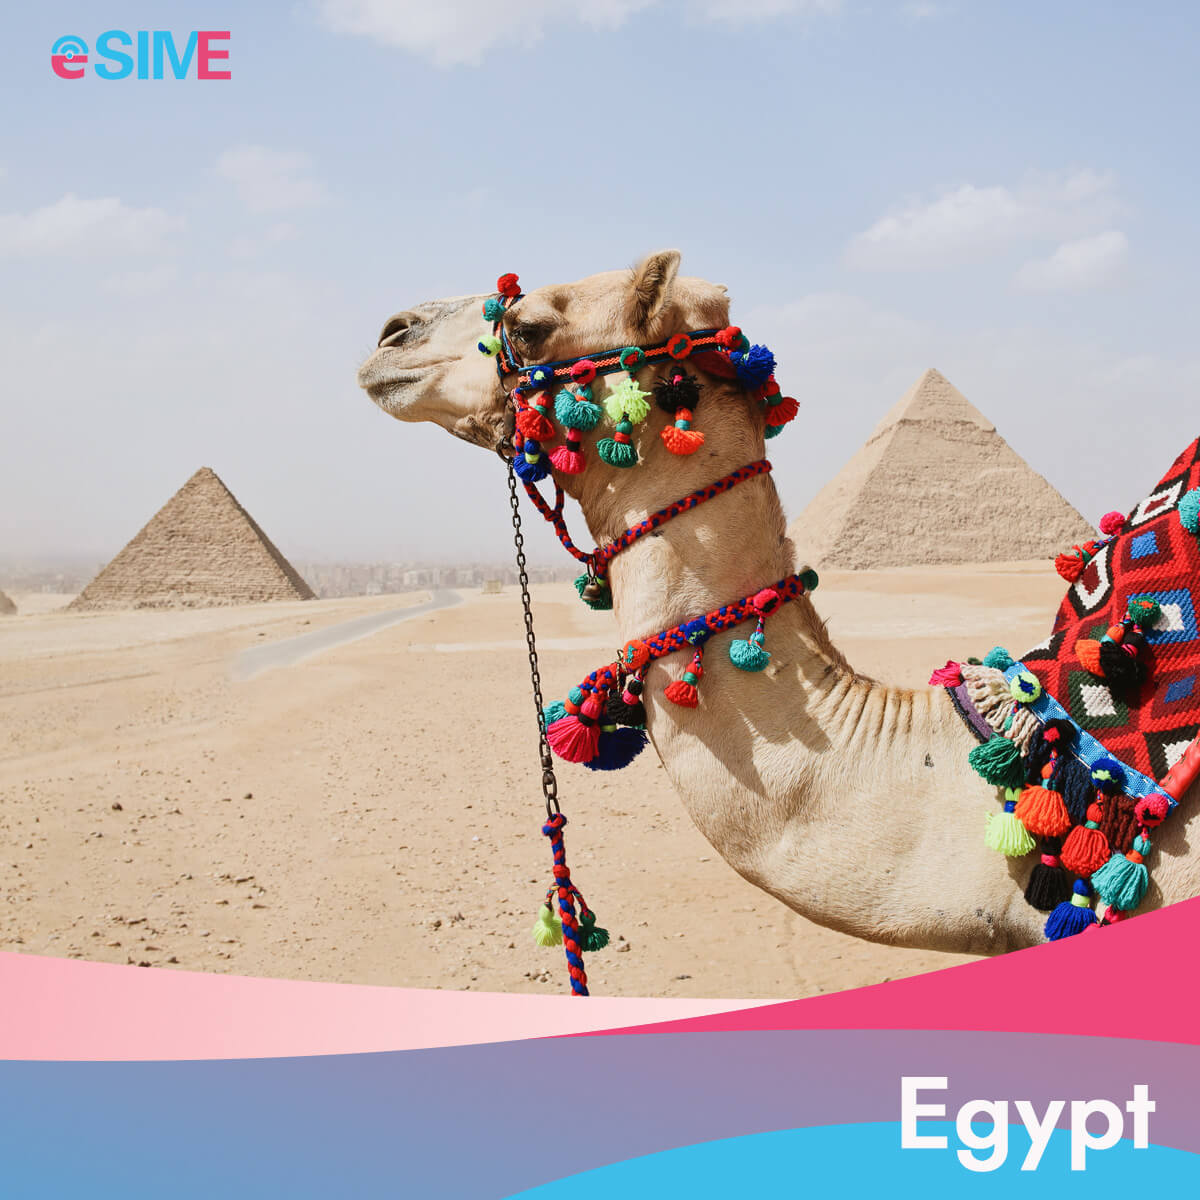 eSIM 1GB Data per Day for Egypt Travel